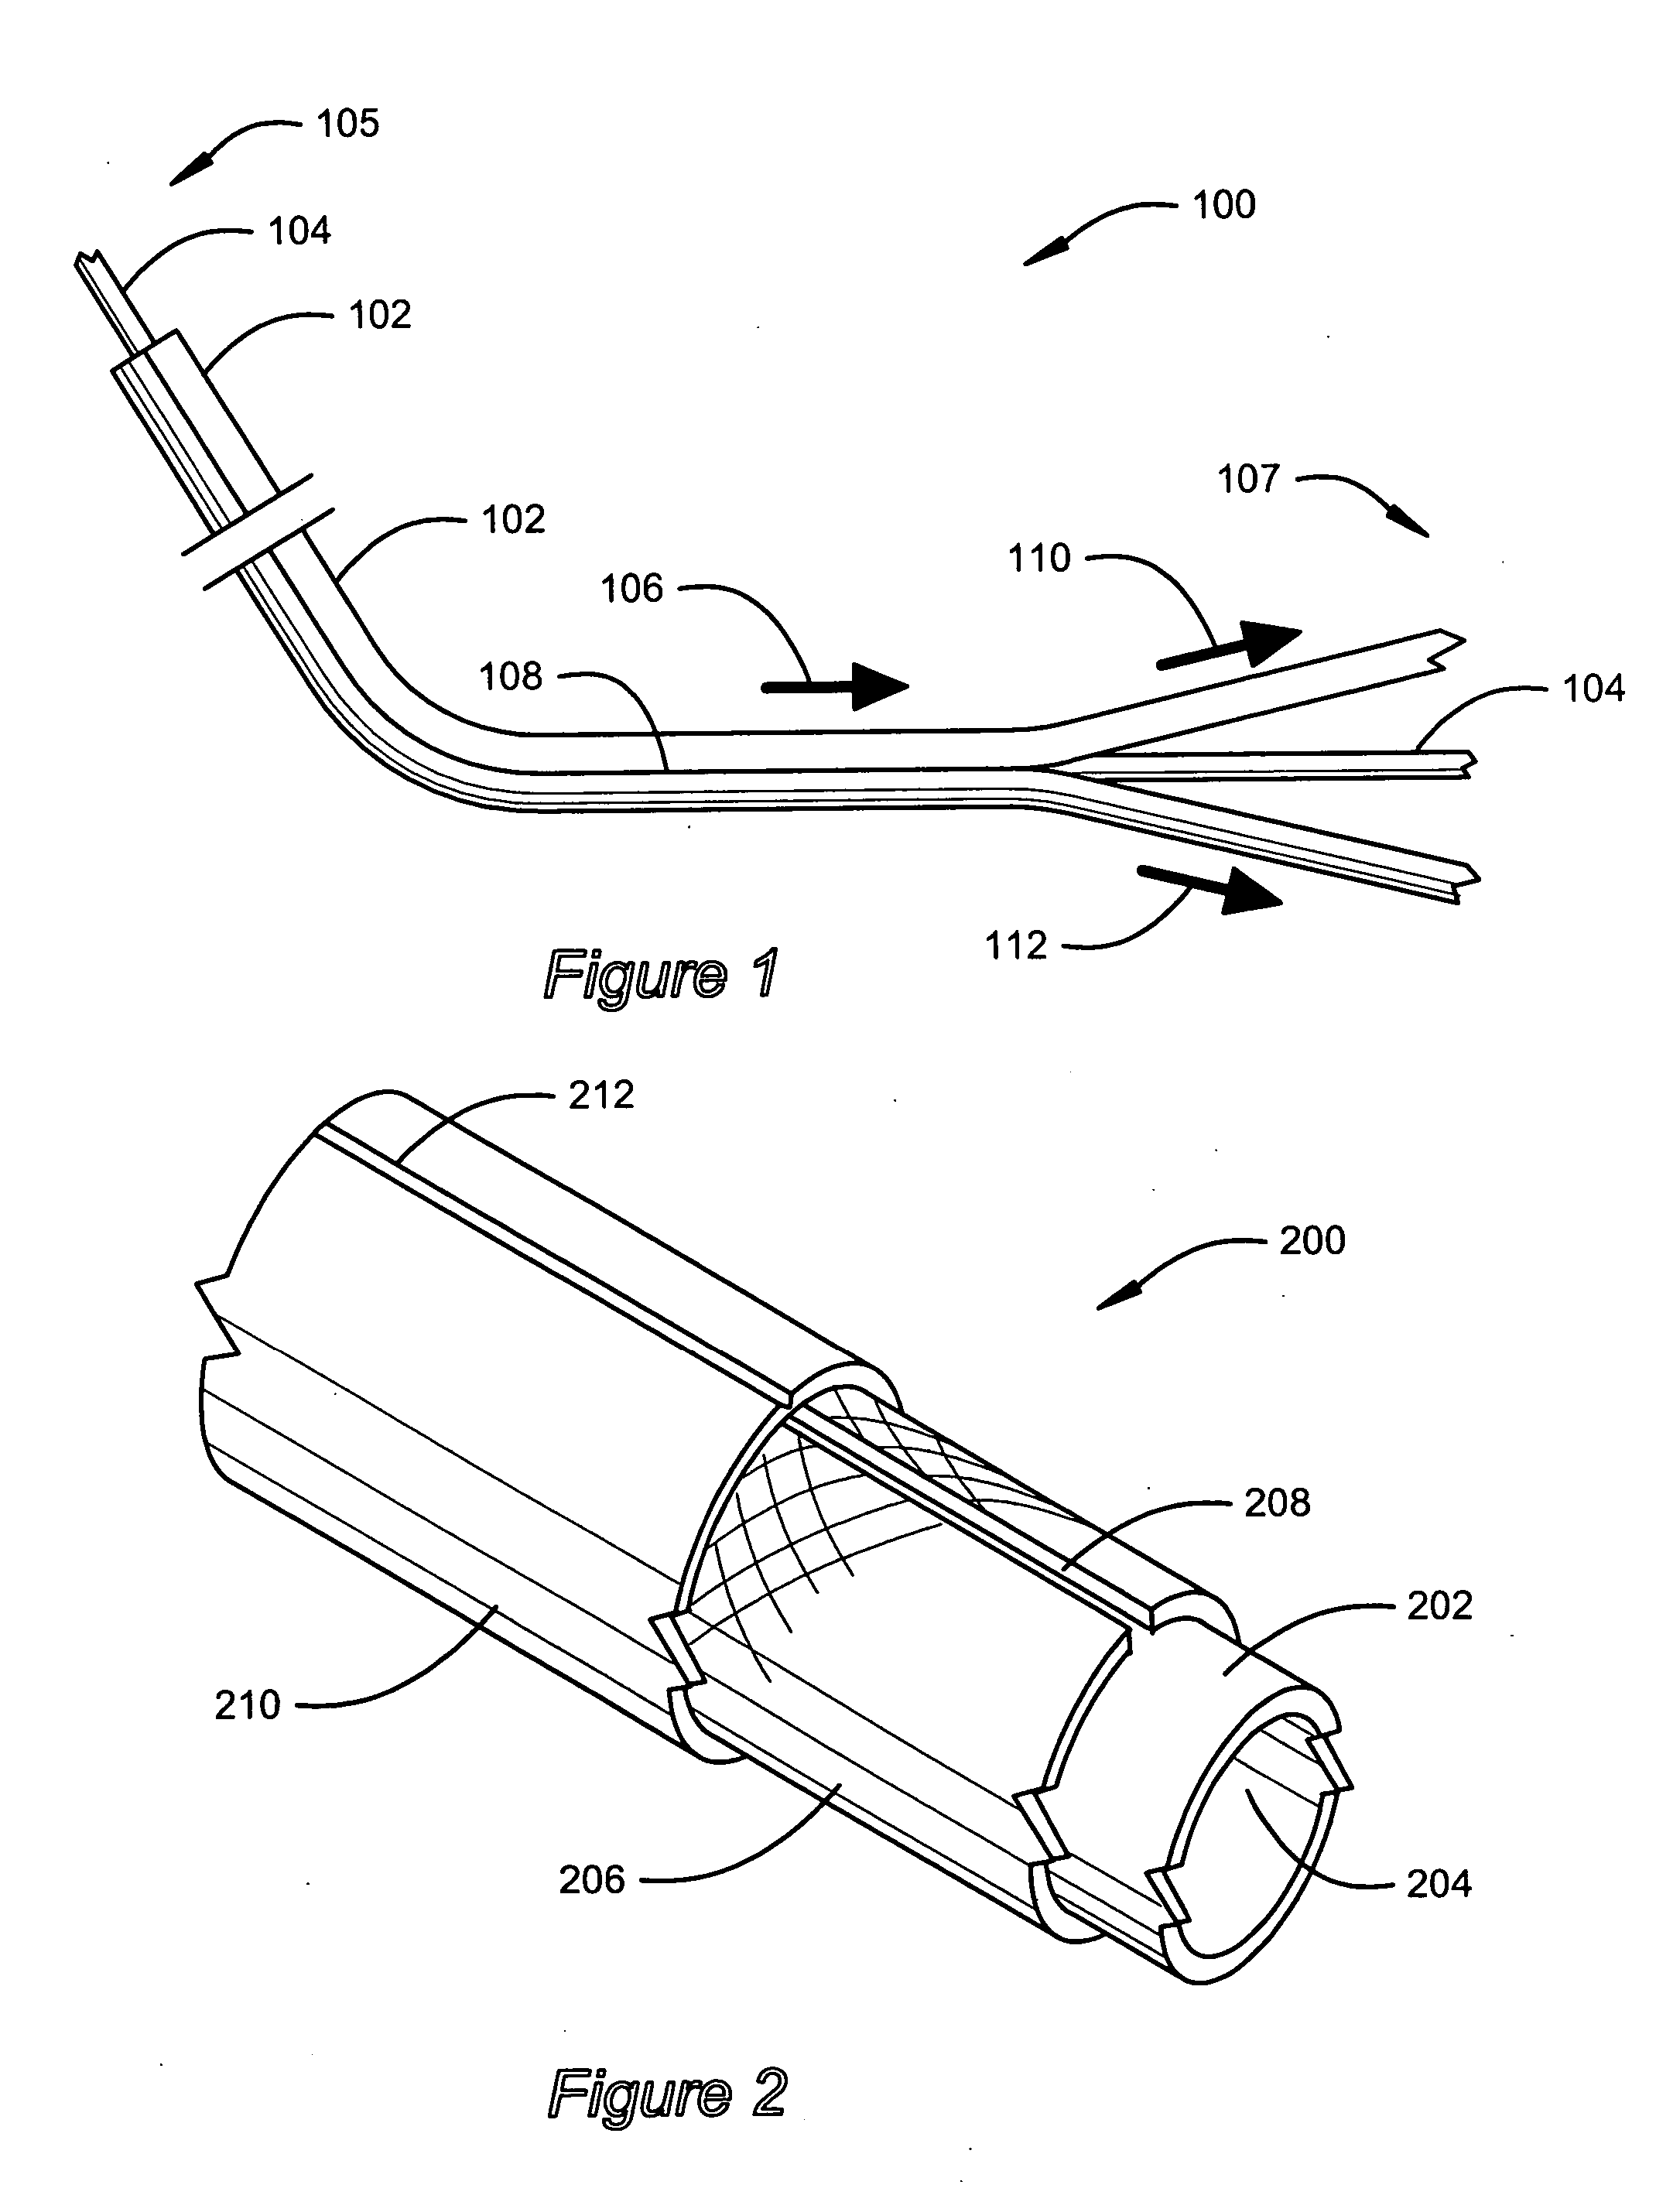 Peel-away catheter shaft